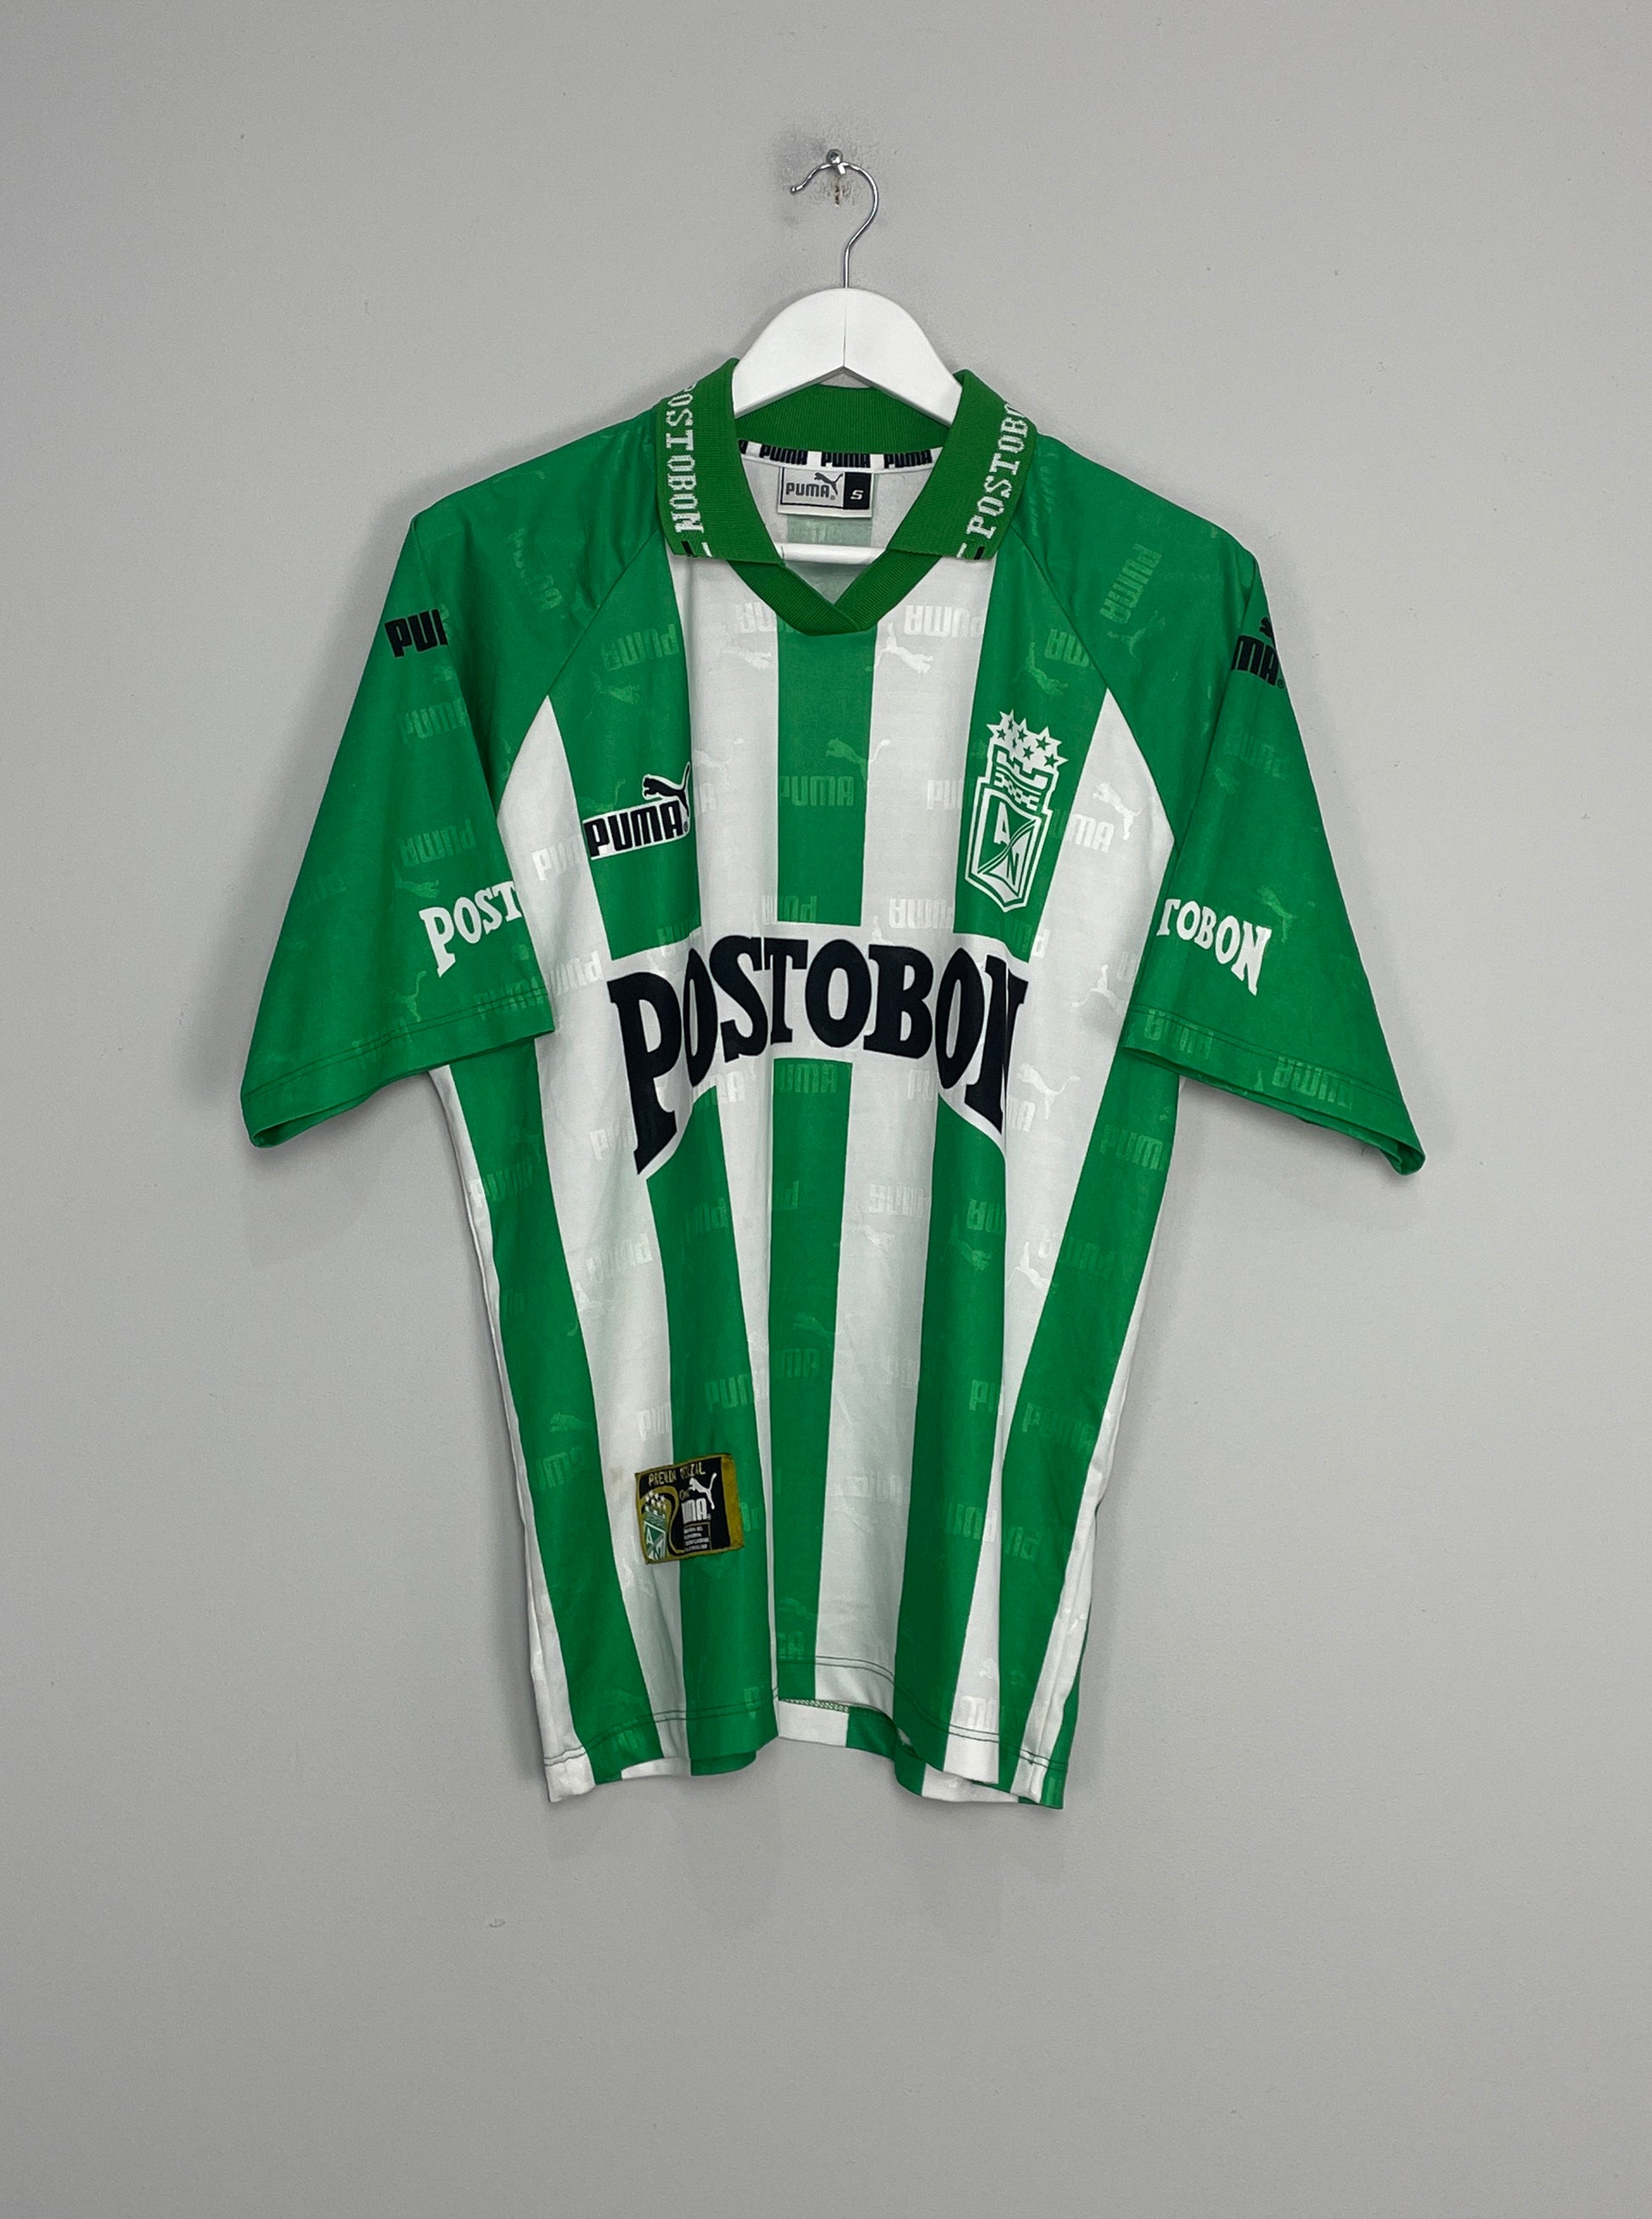 Image of the Atletico Nacional shirt from the 2000/01 season